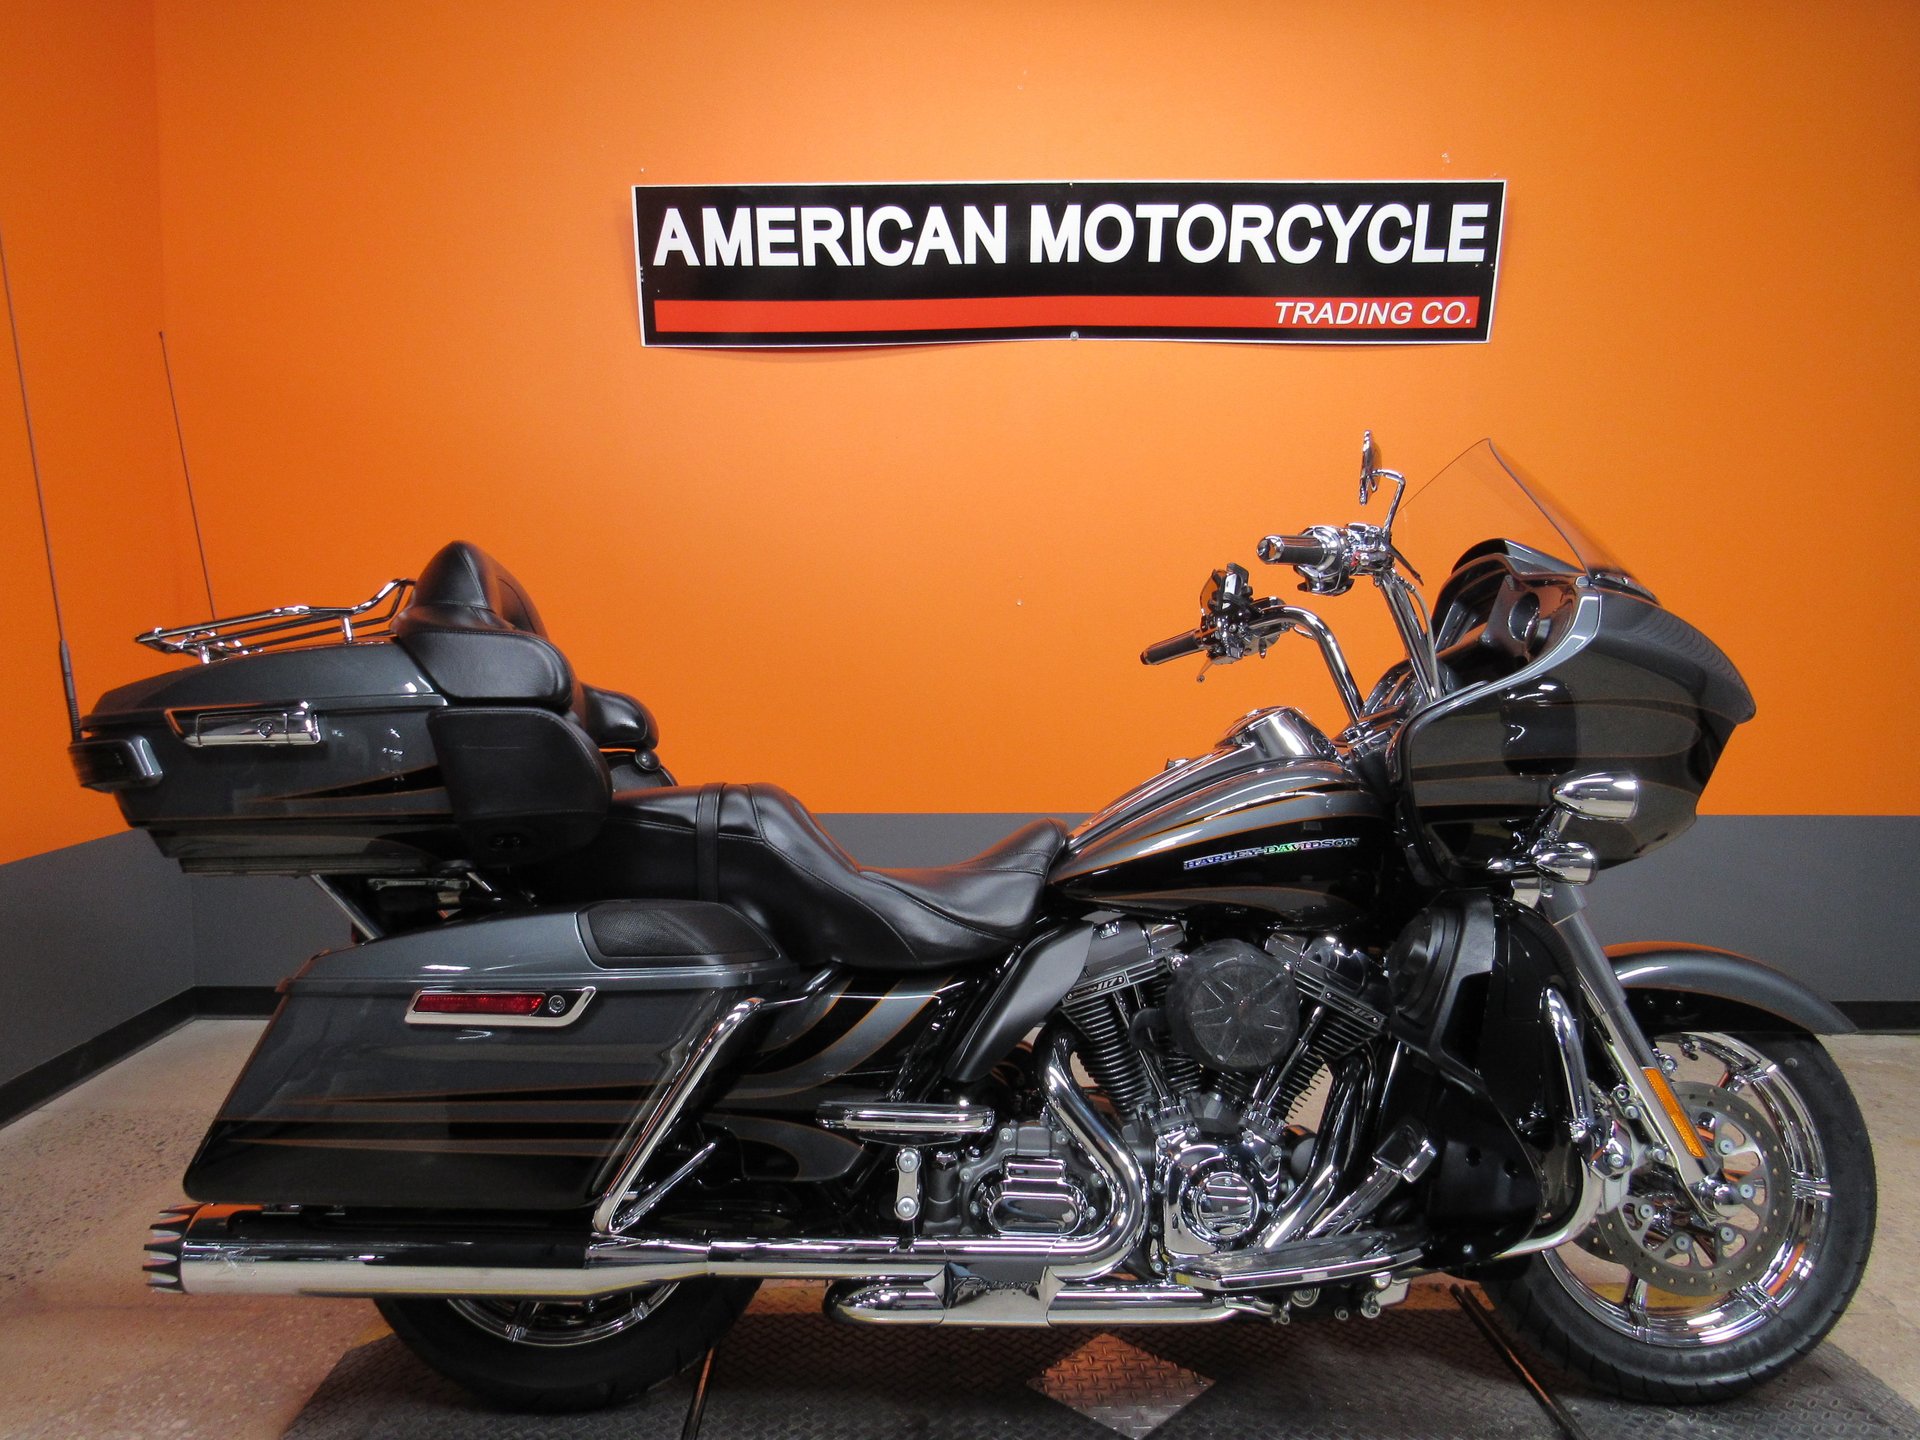 2016 Harley Davidson Cvo Road Glide Ultra American Motorcycle Trading Company Used Harley Davidson Motorcycles